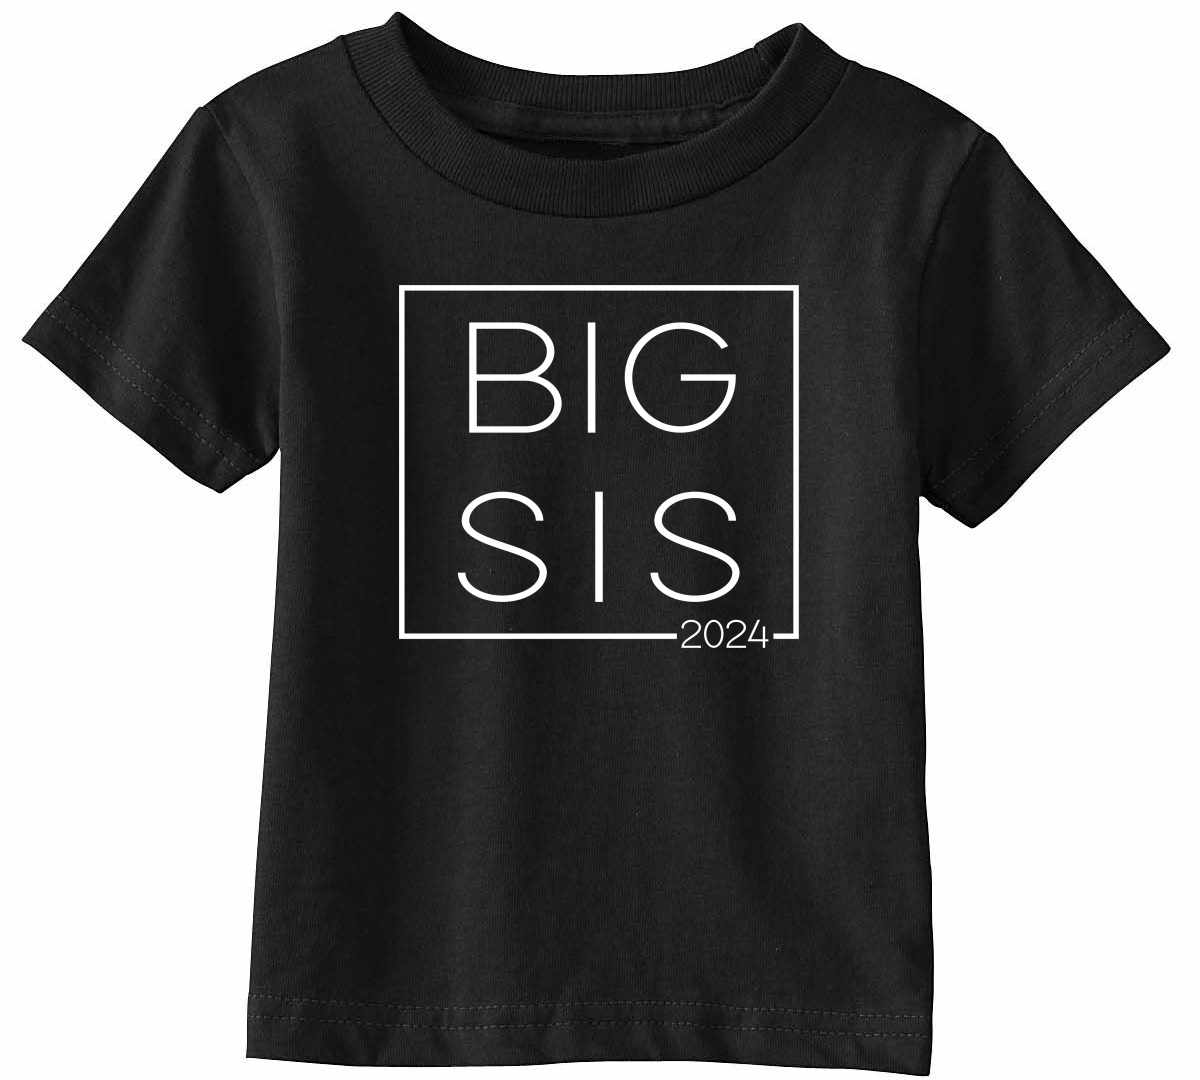 Big Sis 2024 - Big Sister Boxed on Infant-Toddler T-Shirt (#1380-7)